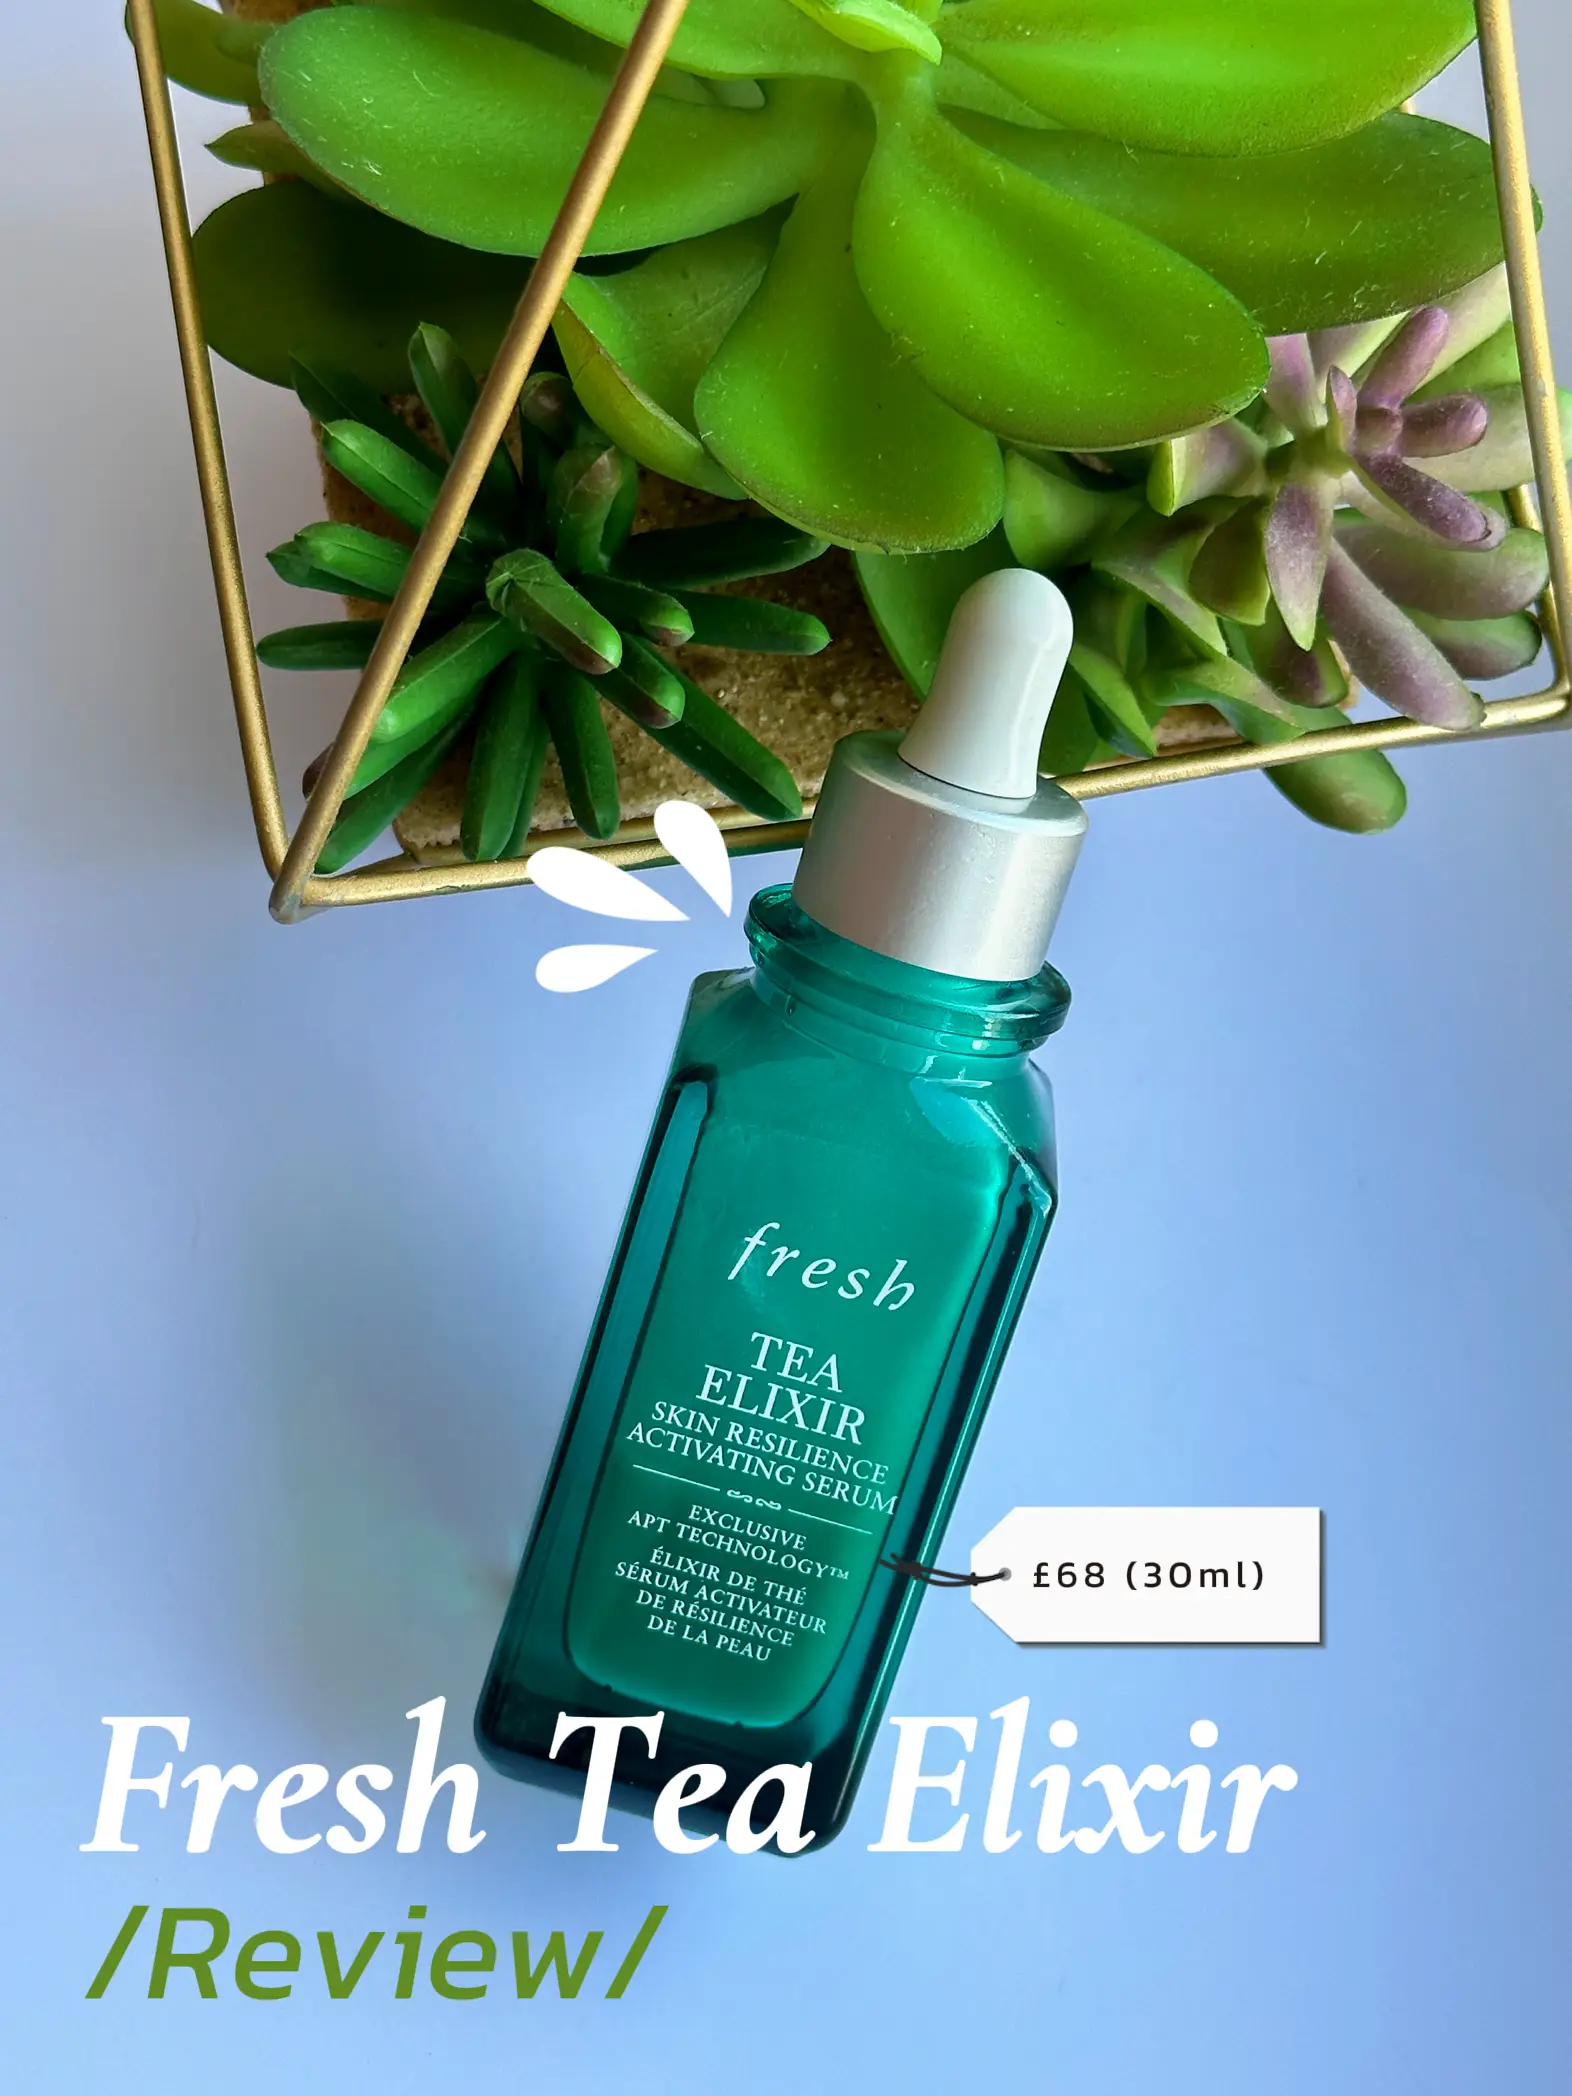 Fresh, Tea Elixir Skin Resilience Activating Serum: Review